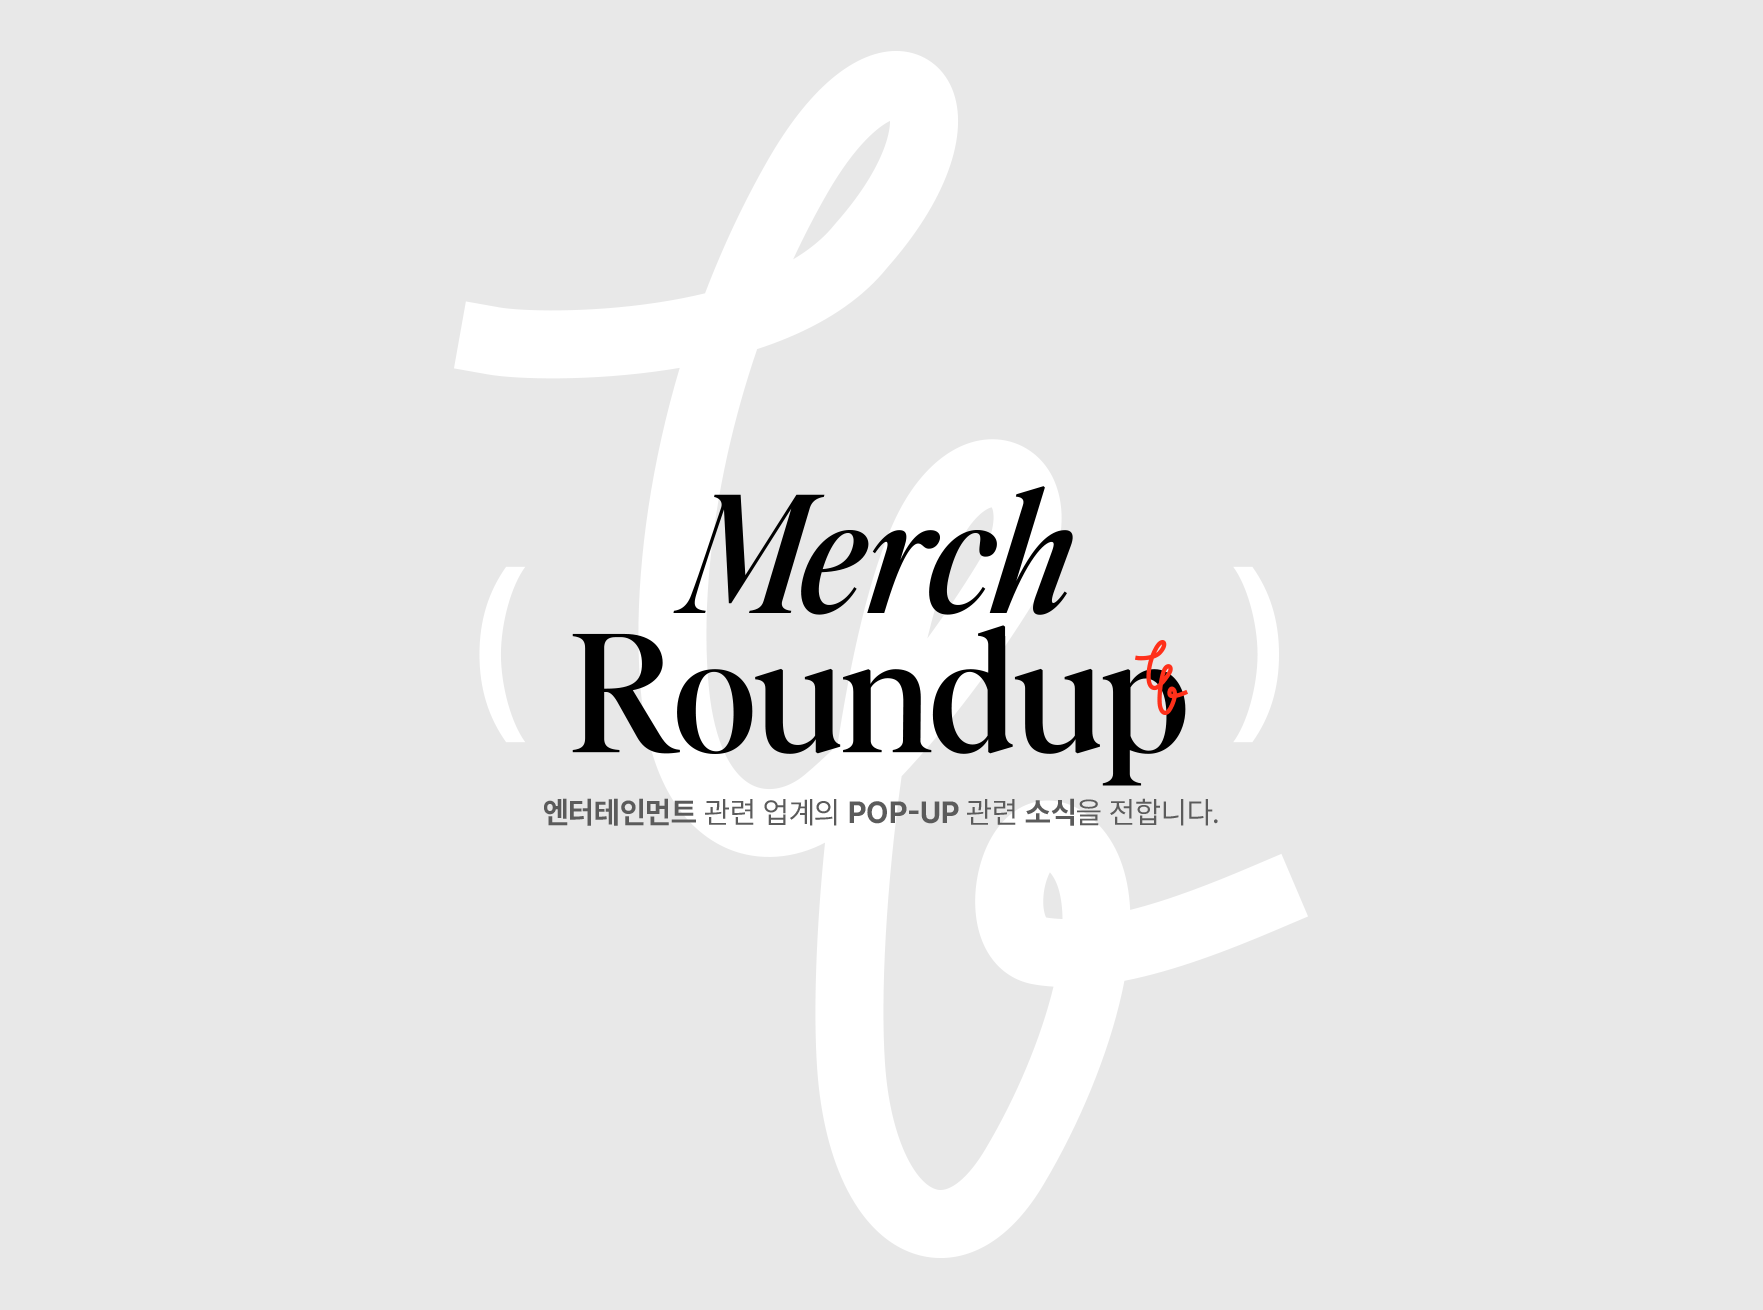 Merch Roundup 뉴스레터 | 엔터테인먼트 굿즈에대해 경험을 바탕으로 한 인사이트 공유